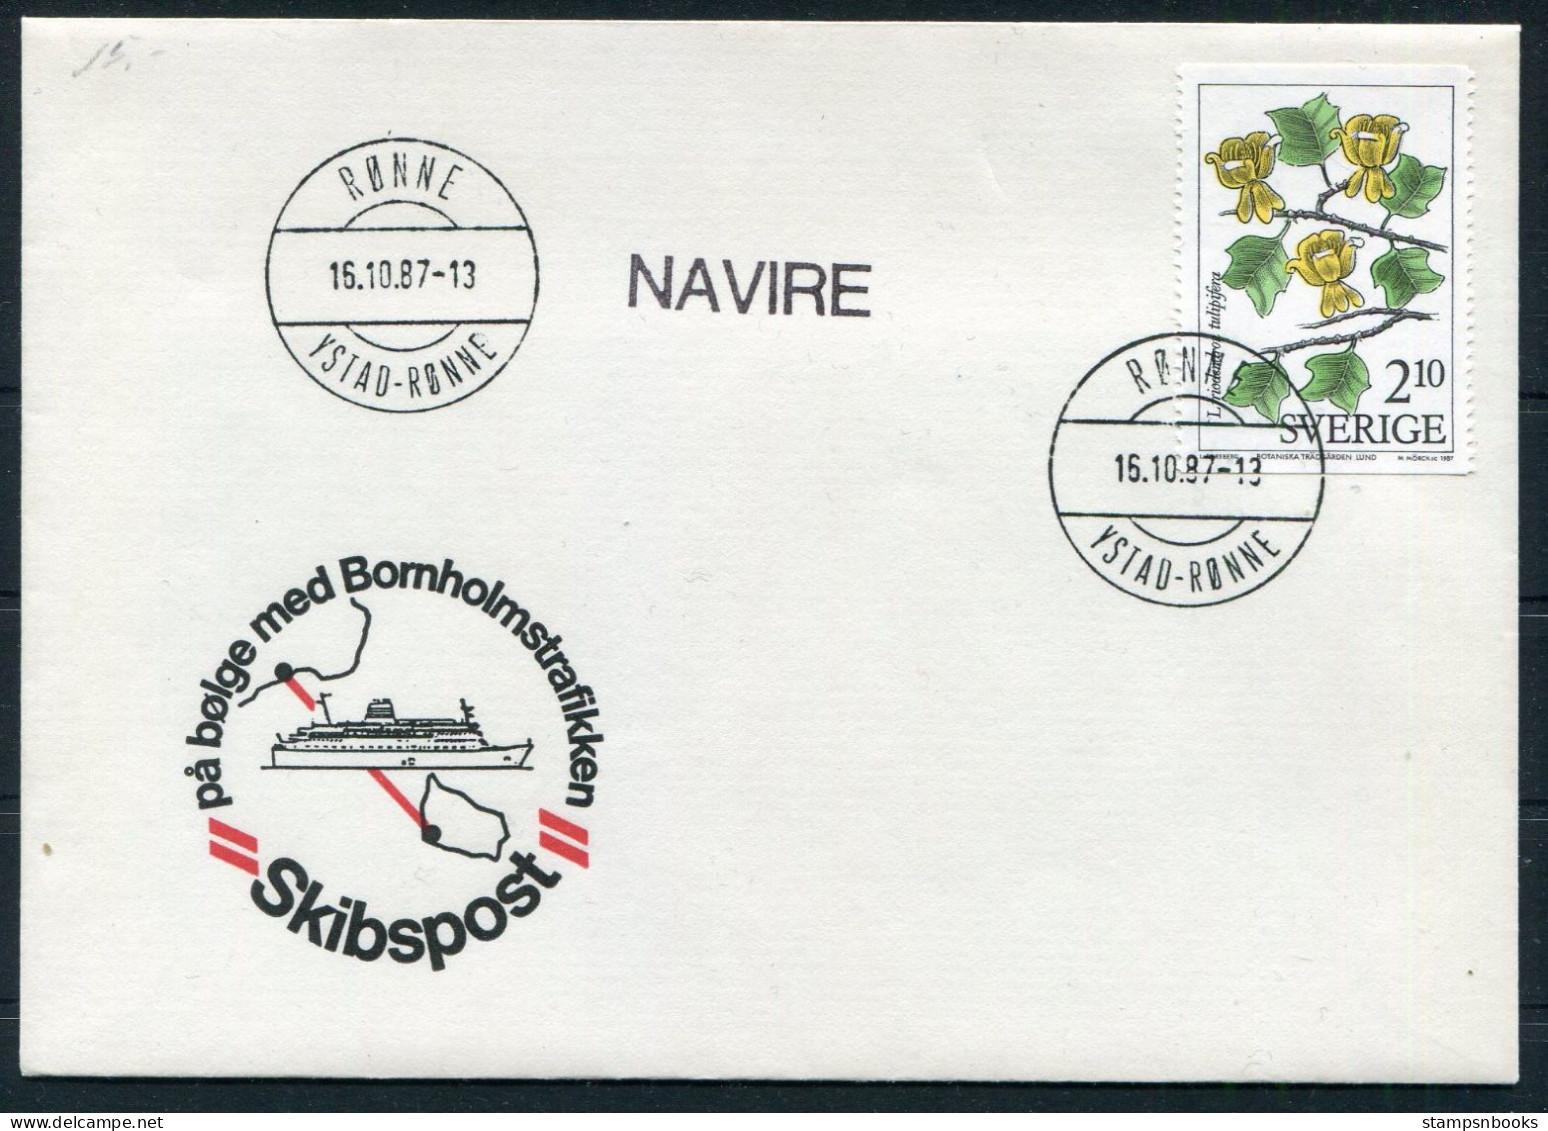 1987 Sweden Denmark Bornholm Ystad - Ronne Ship NAVIRE Skibspost Cover - Cartas & Documentos